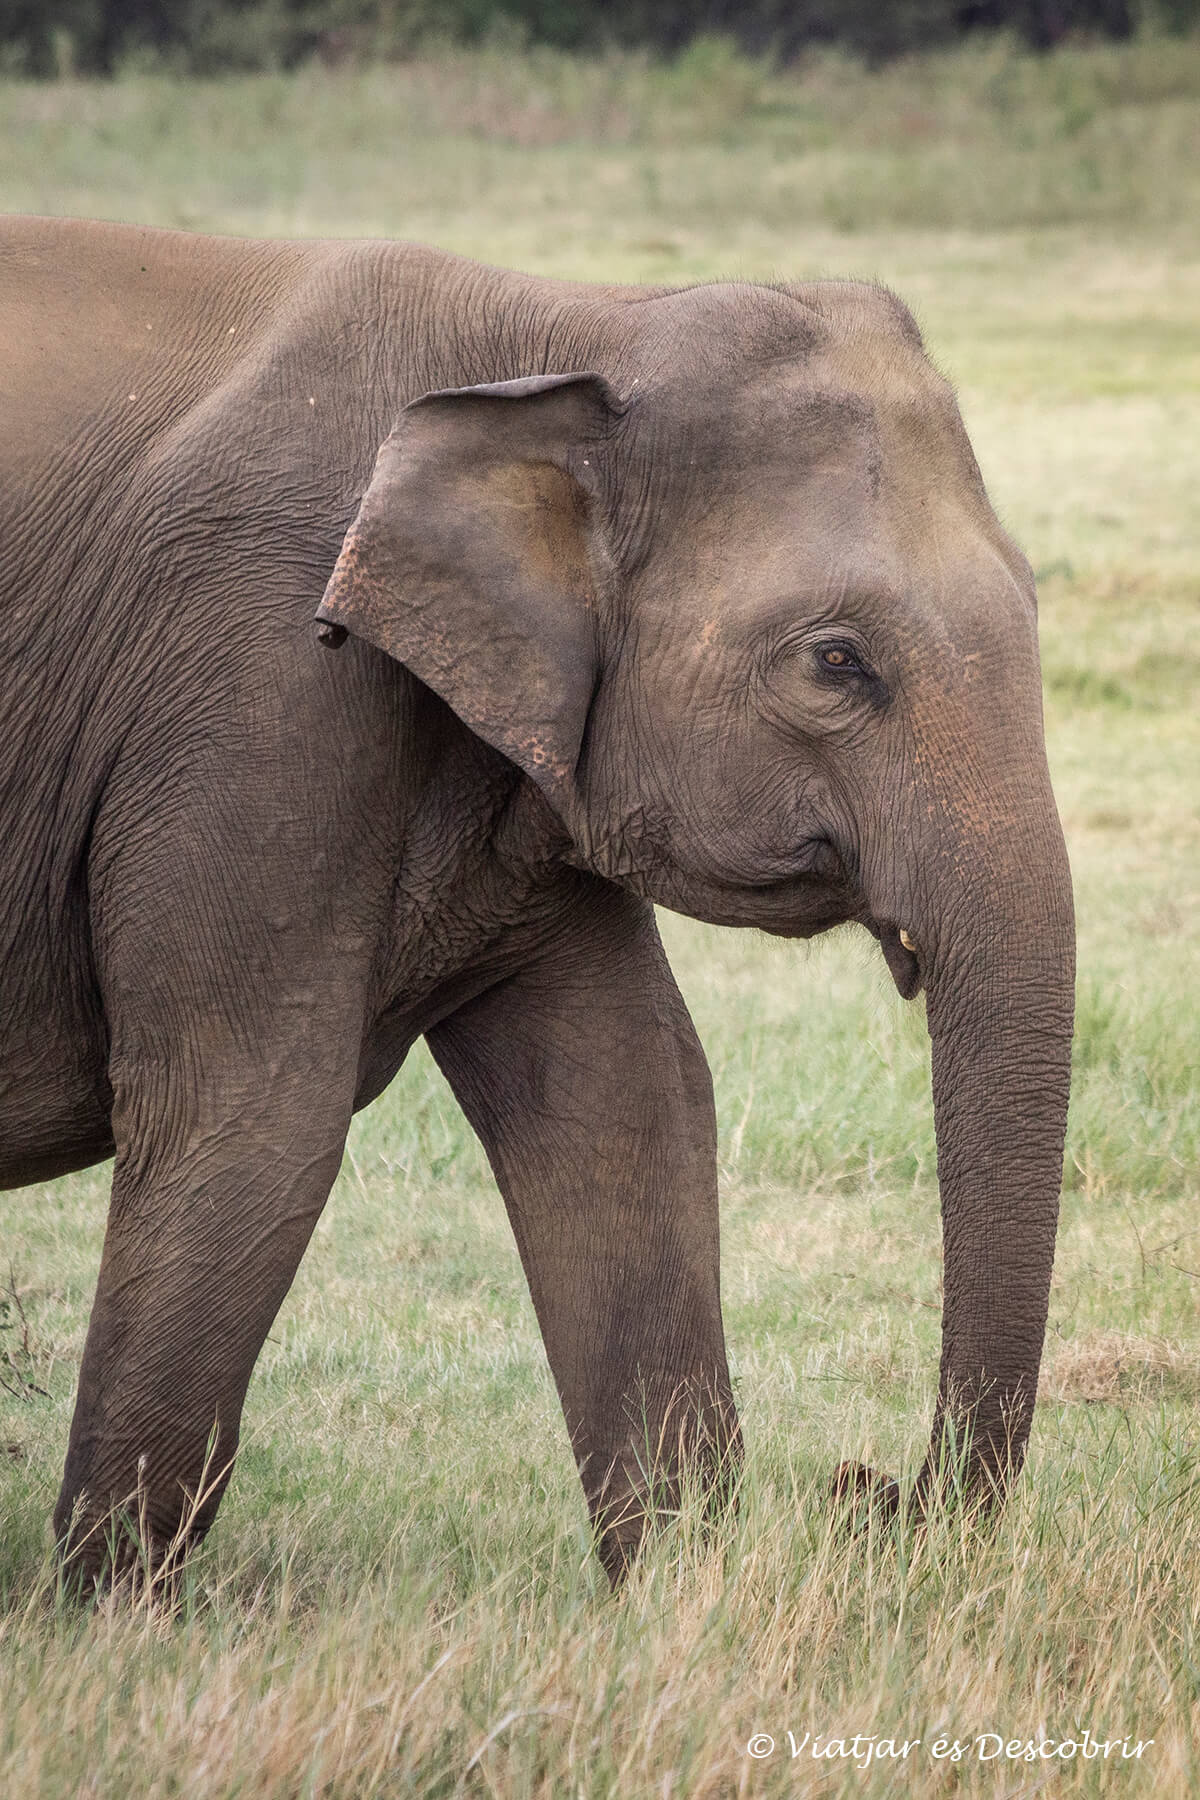 detalles de la cara de un elefante asiático joven en libertad